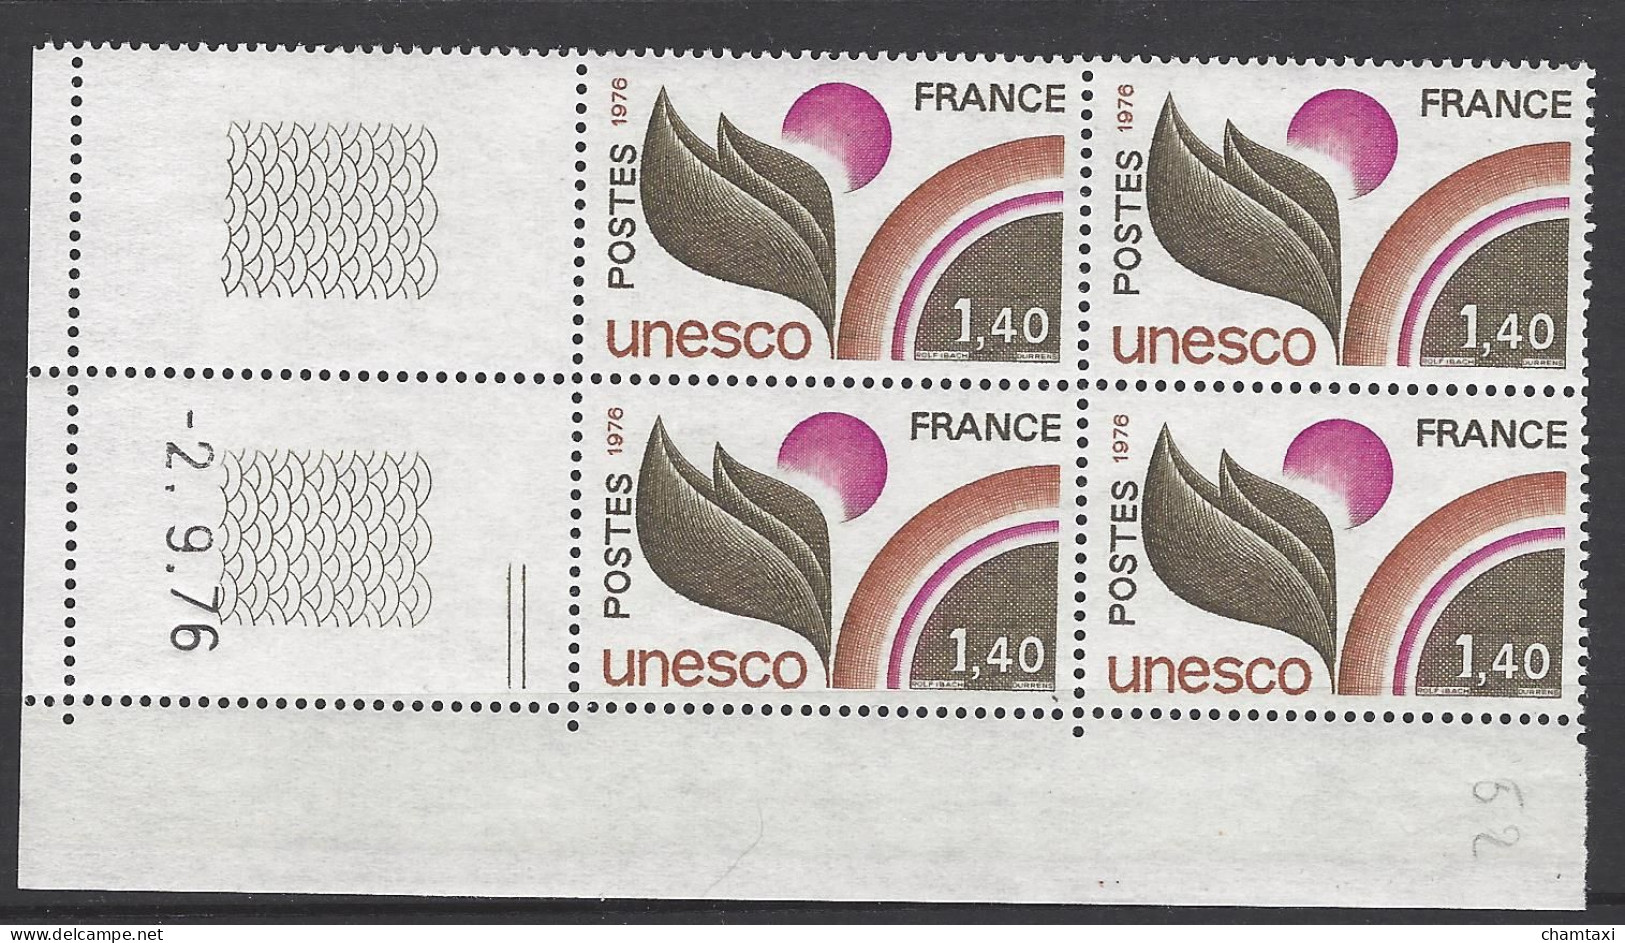 CD 52 FRANCE 1976 TIMBRE SERVICE UNESCO COIN DATE 52 : 2 / 9 / 76 - Dienstzegels